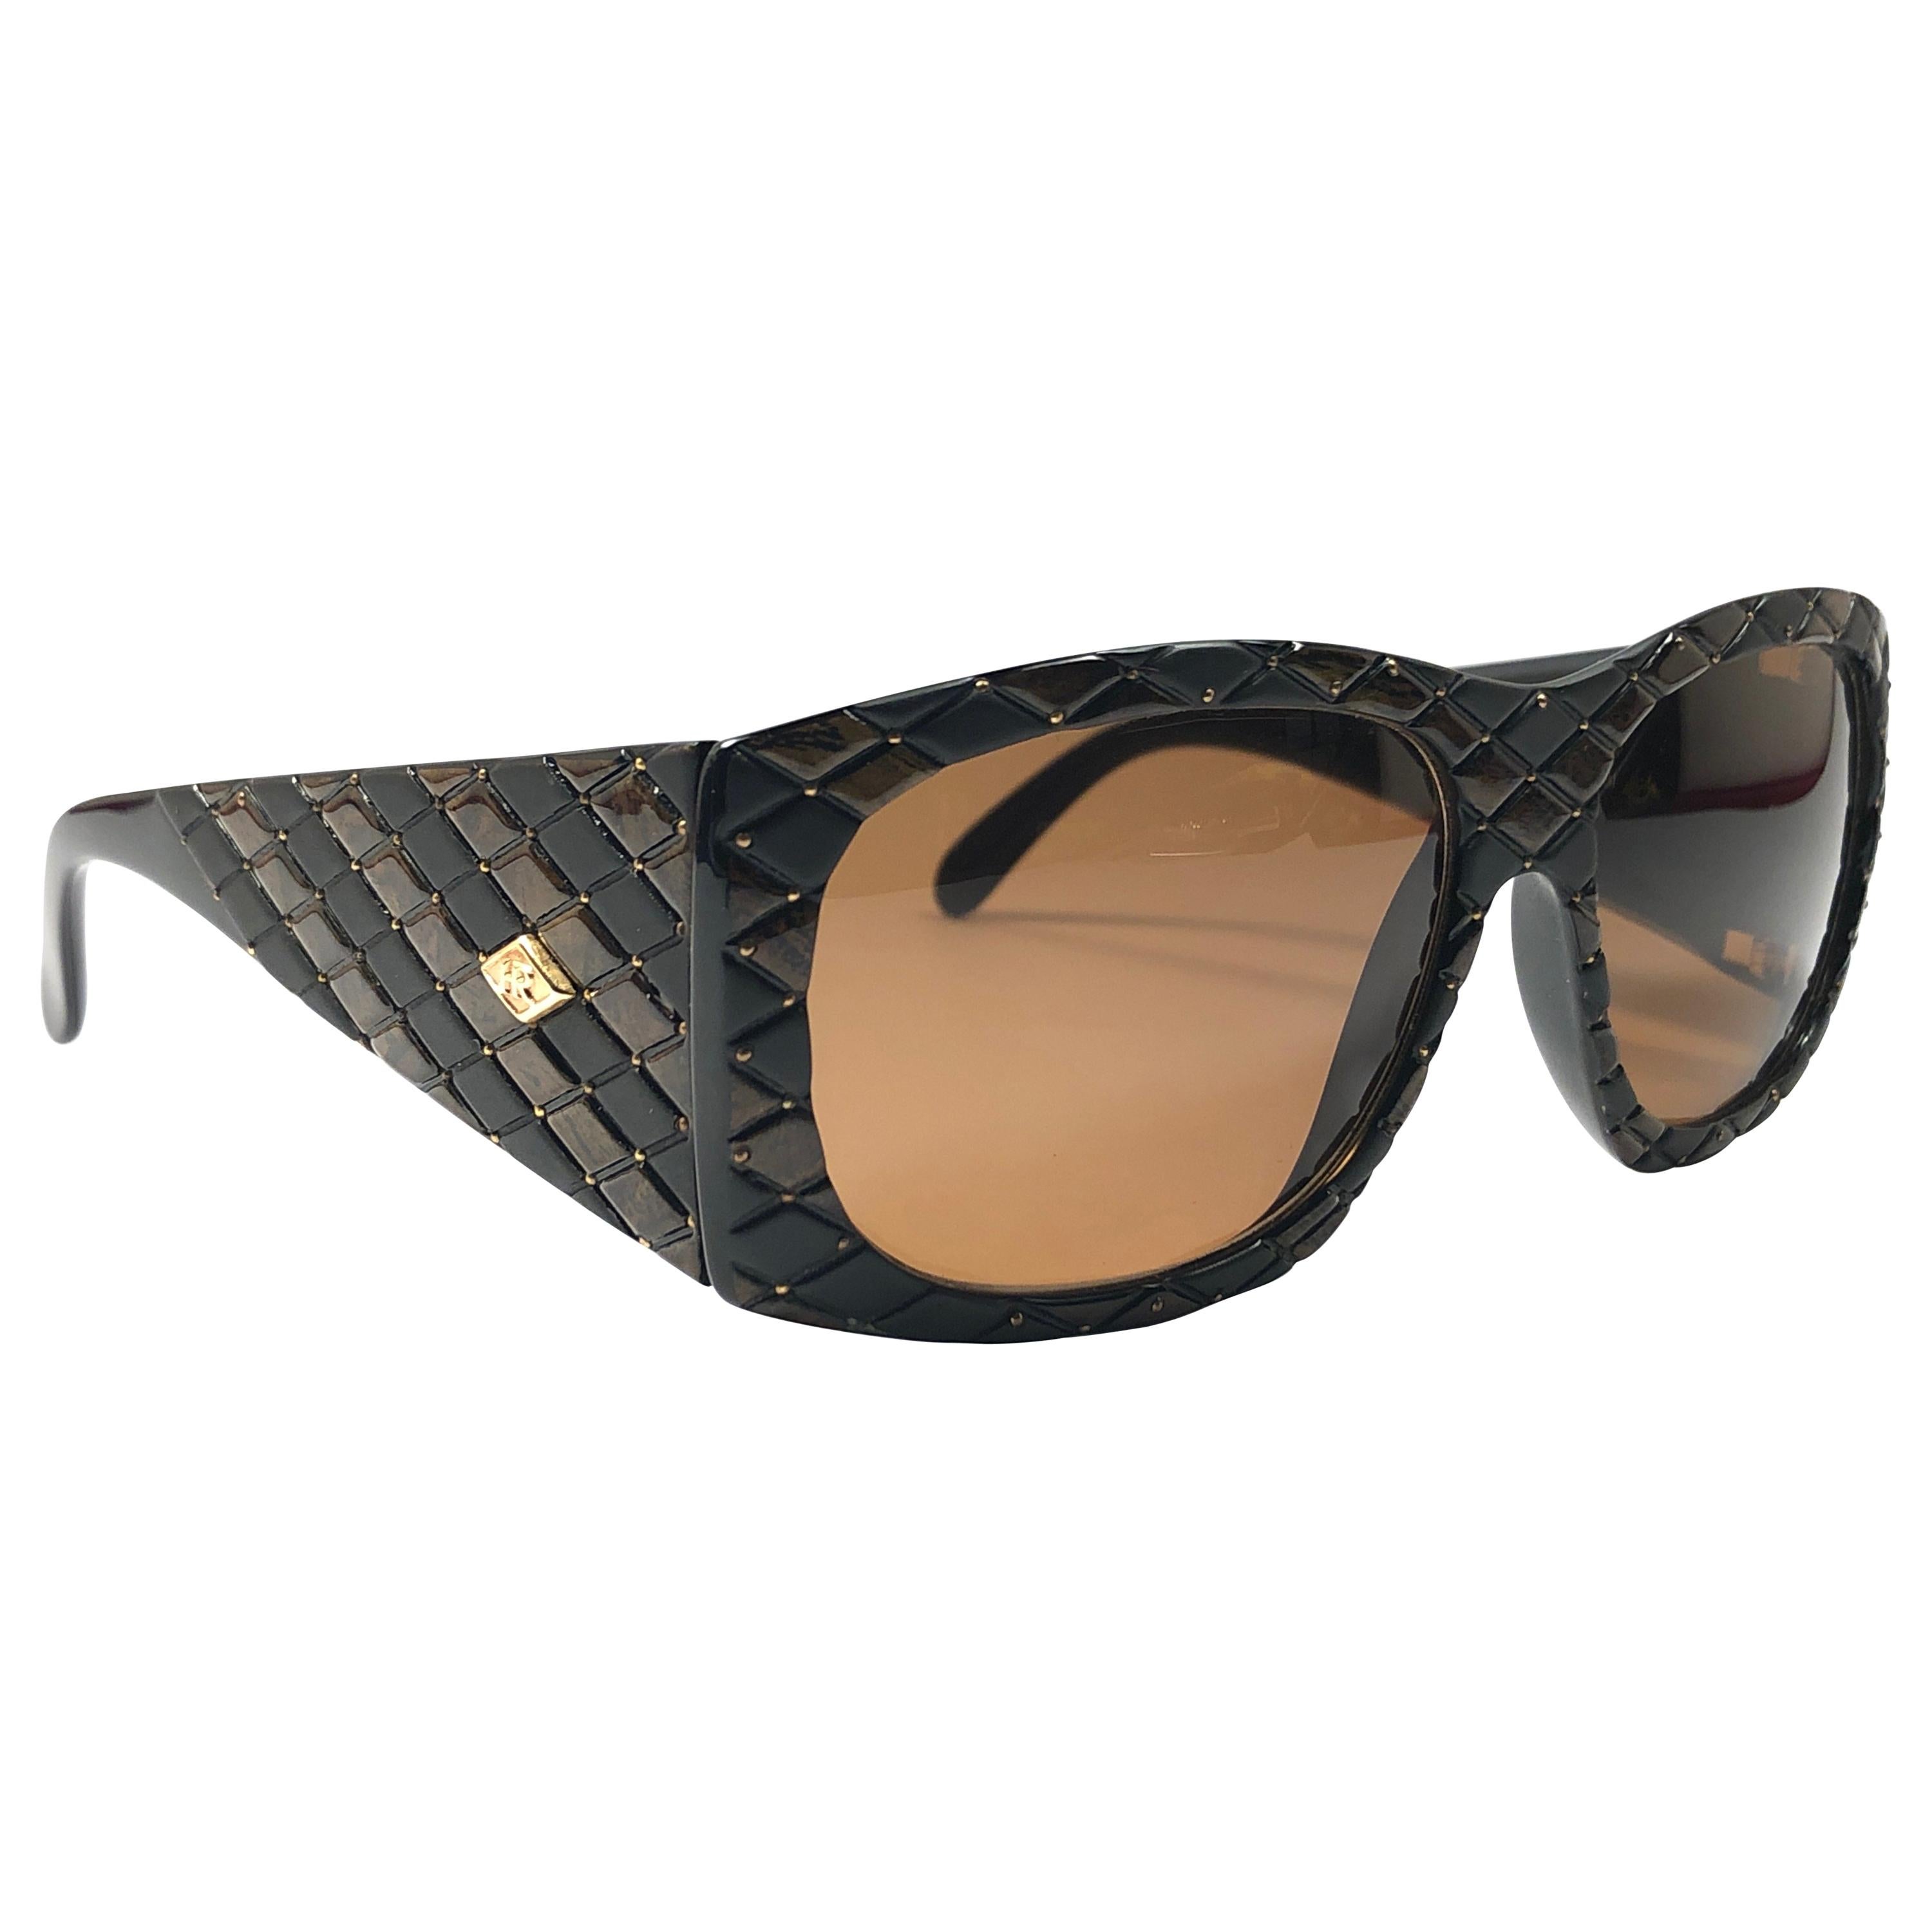 Helena Rubinstein Vintage Sunglasses HR 25 Black Gold 64mm NOS Made in France 